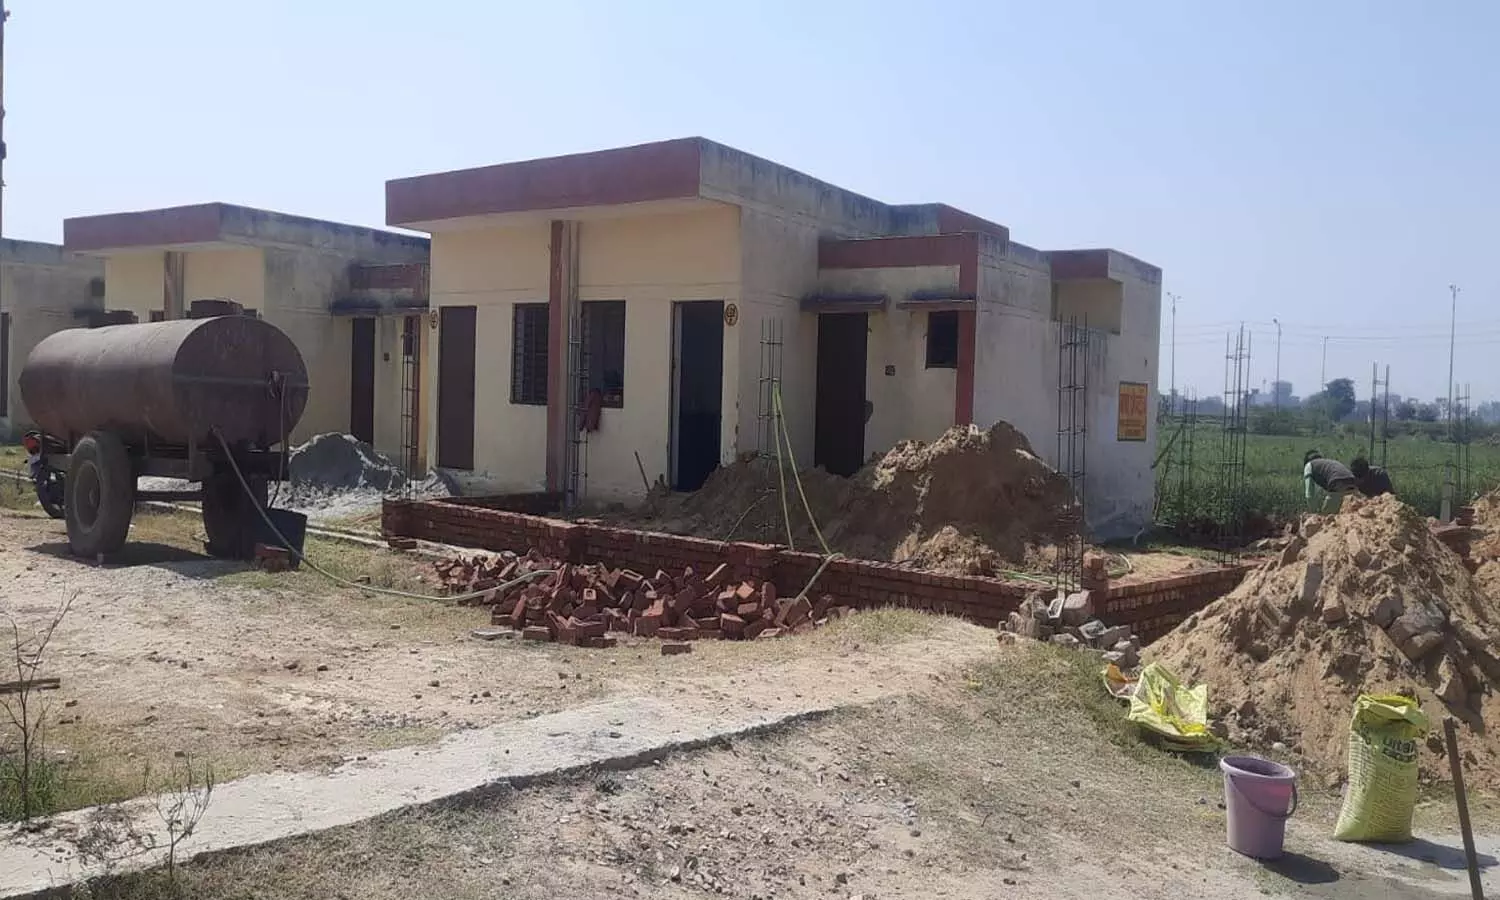 Water problem in housing development colony in Meerut, allottees threaten lockout